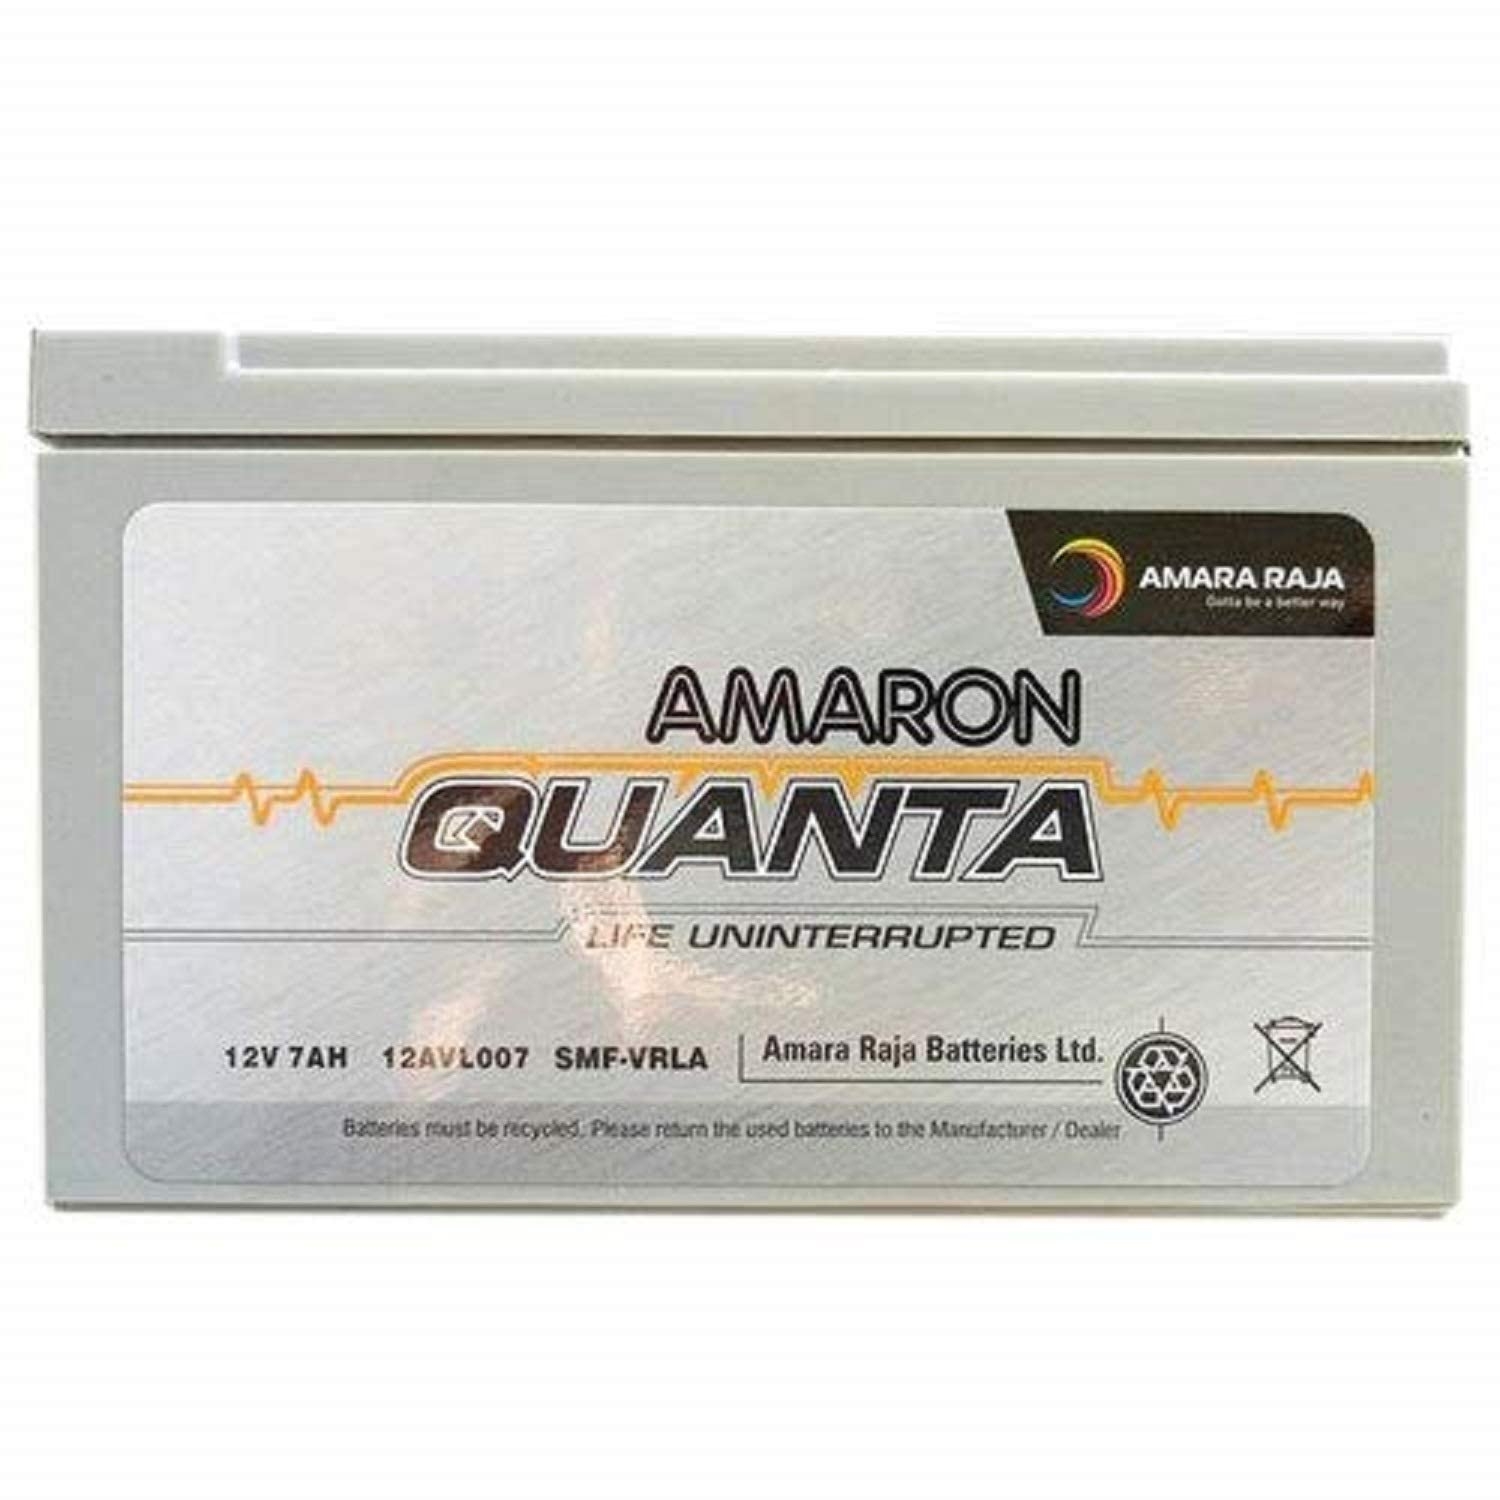 AMARON Quanta 12V 7Ah SMF UPS-Emergency Battery for Solar Instruments - VRLA 12-07/ 12V, 7AH C20 - 15 Month Warranty